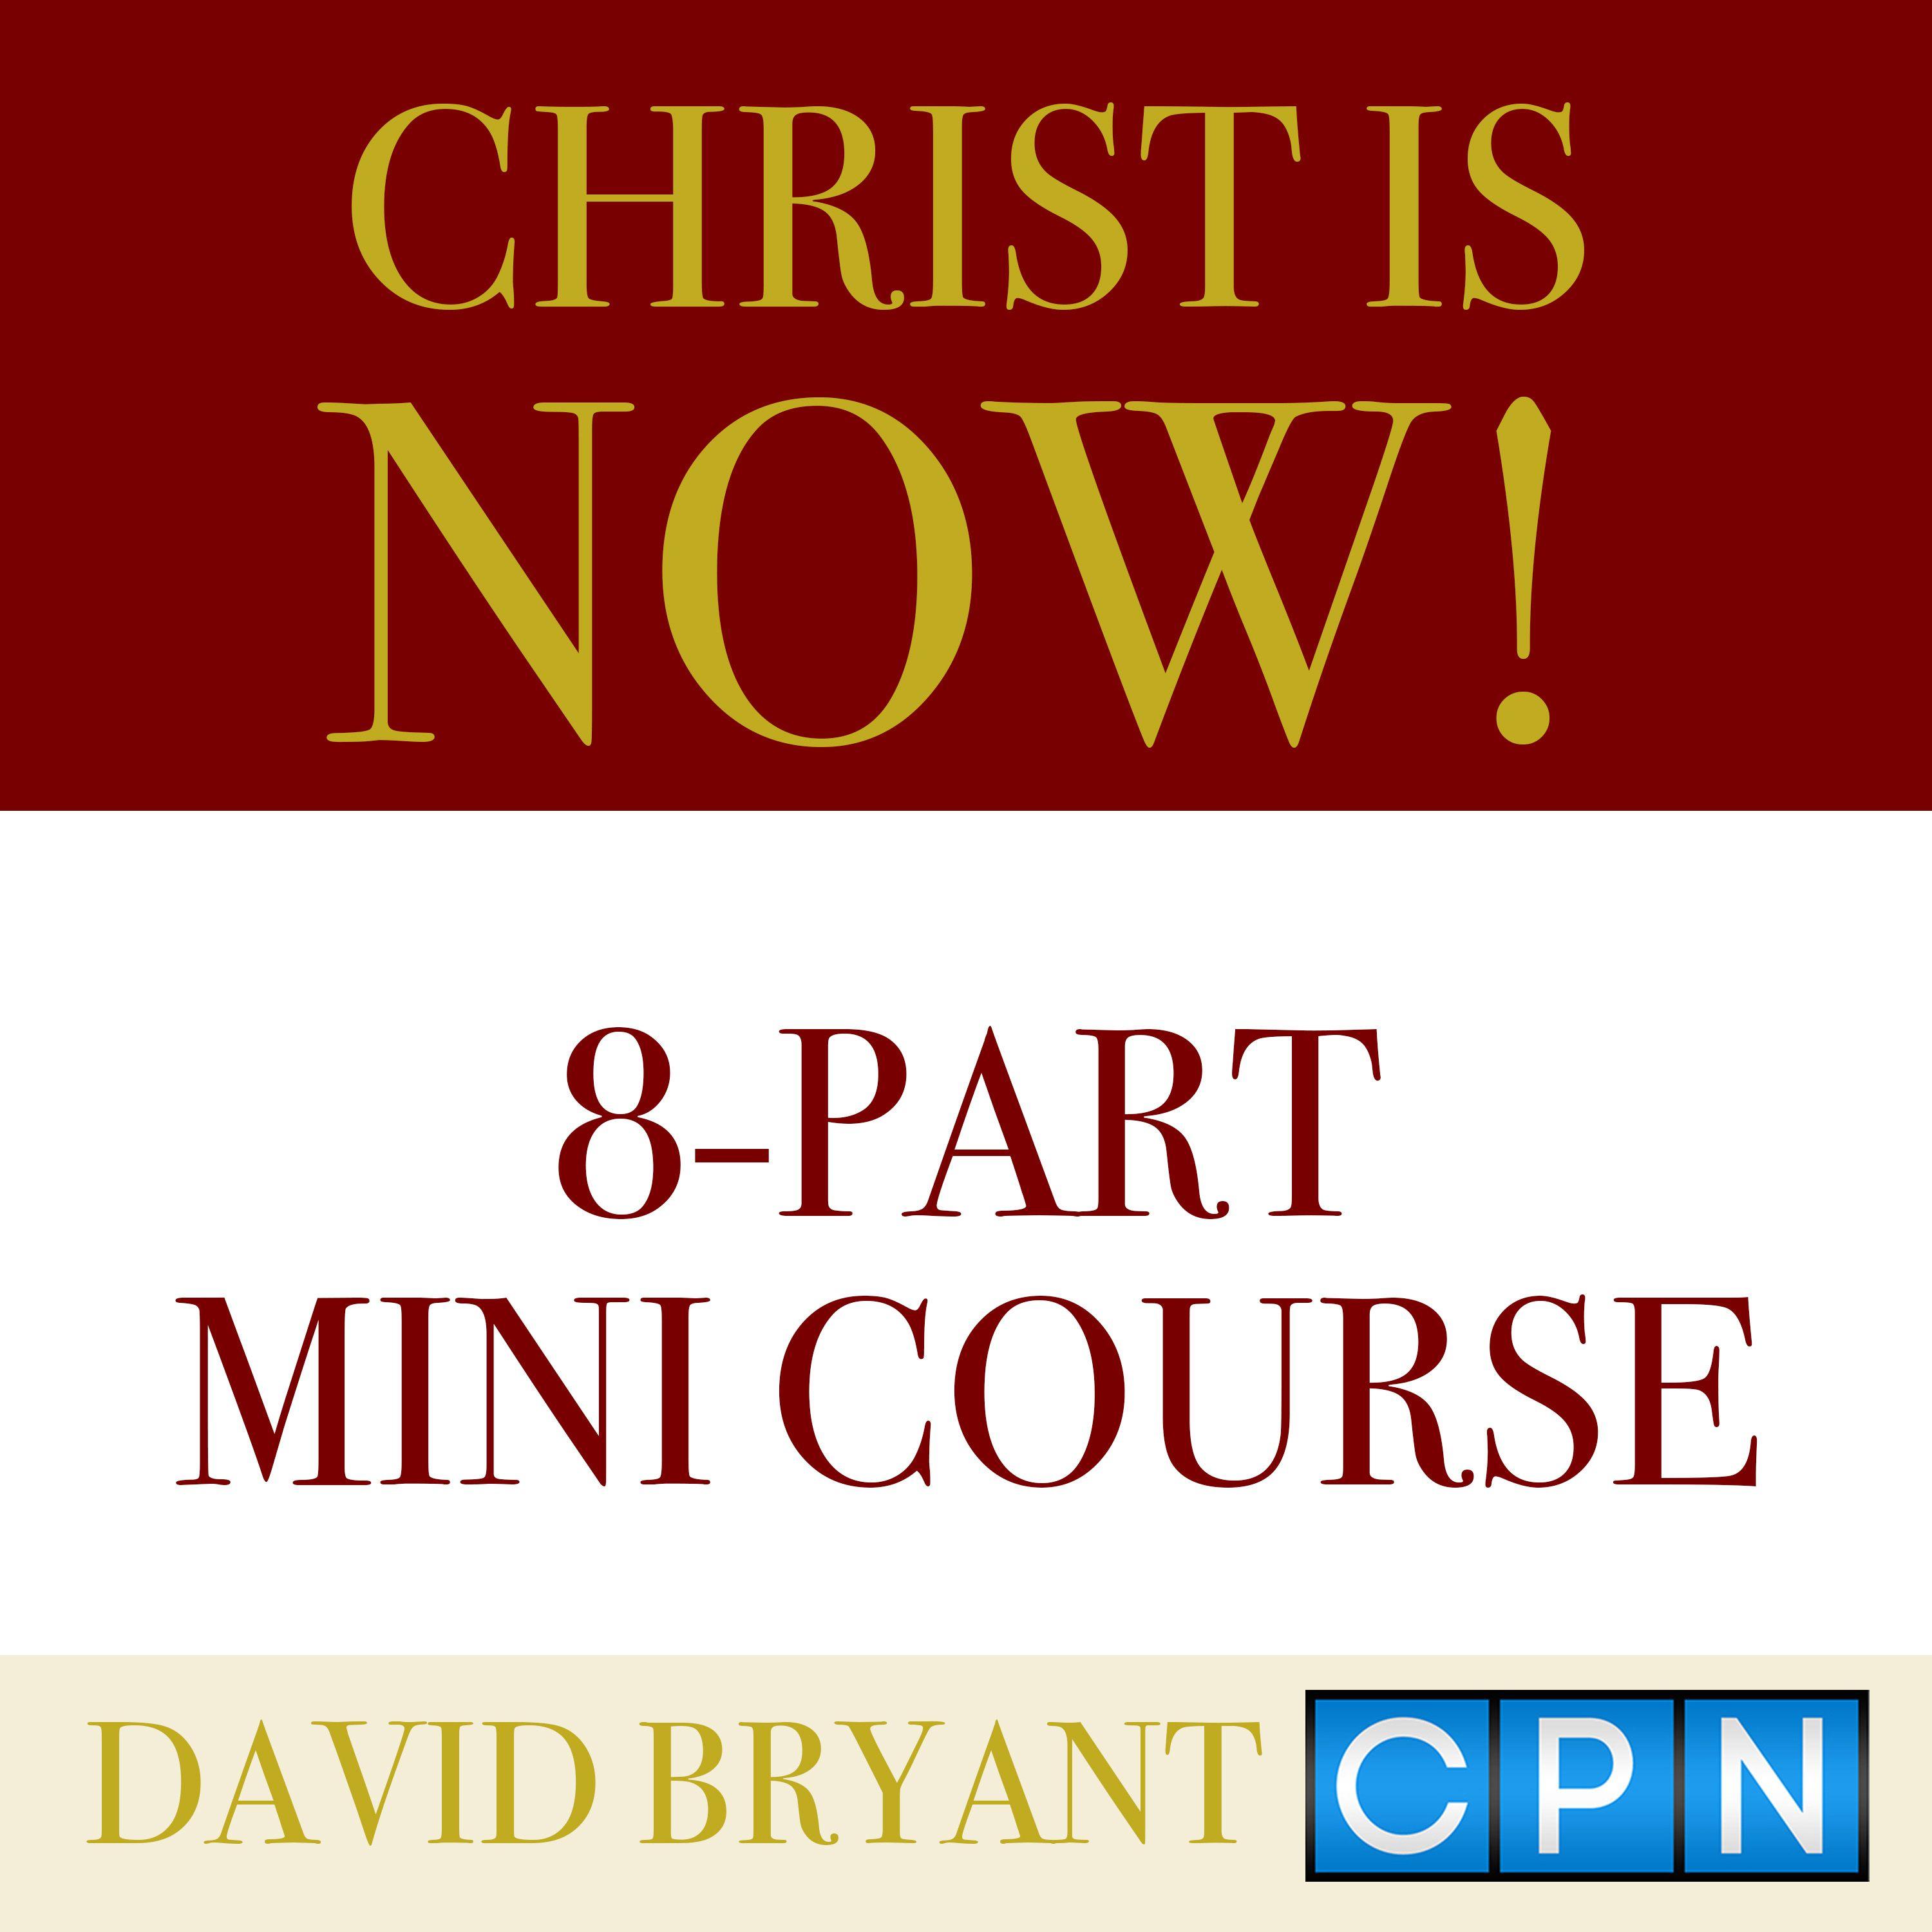 CPN Logo - David Bryant CPN Logo - ChristNOW